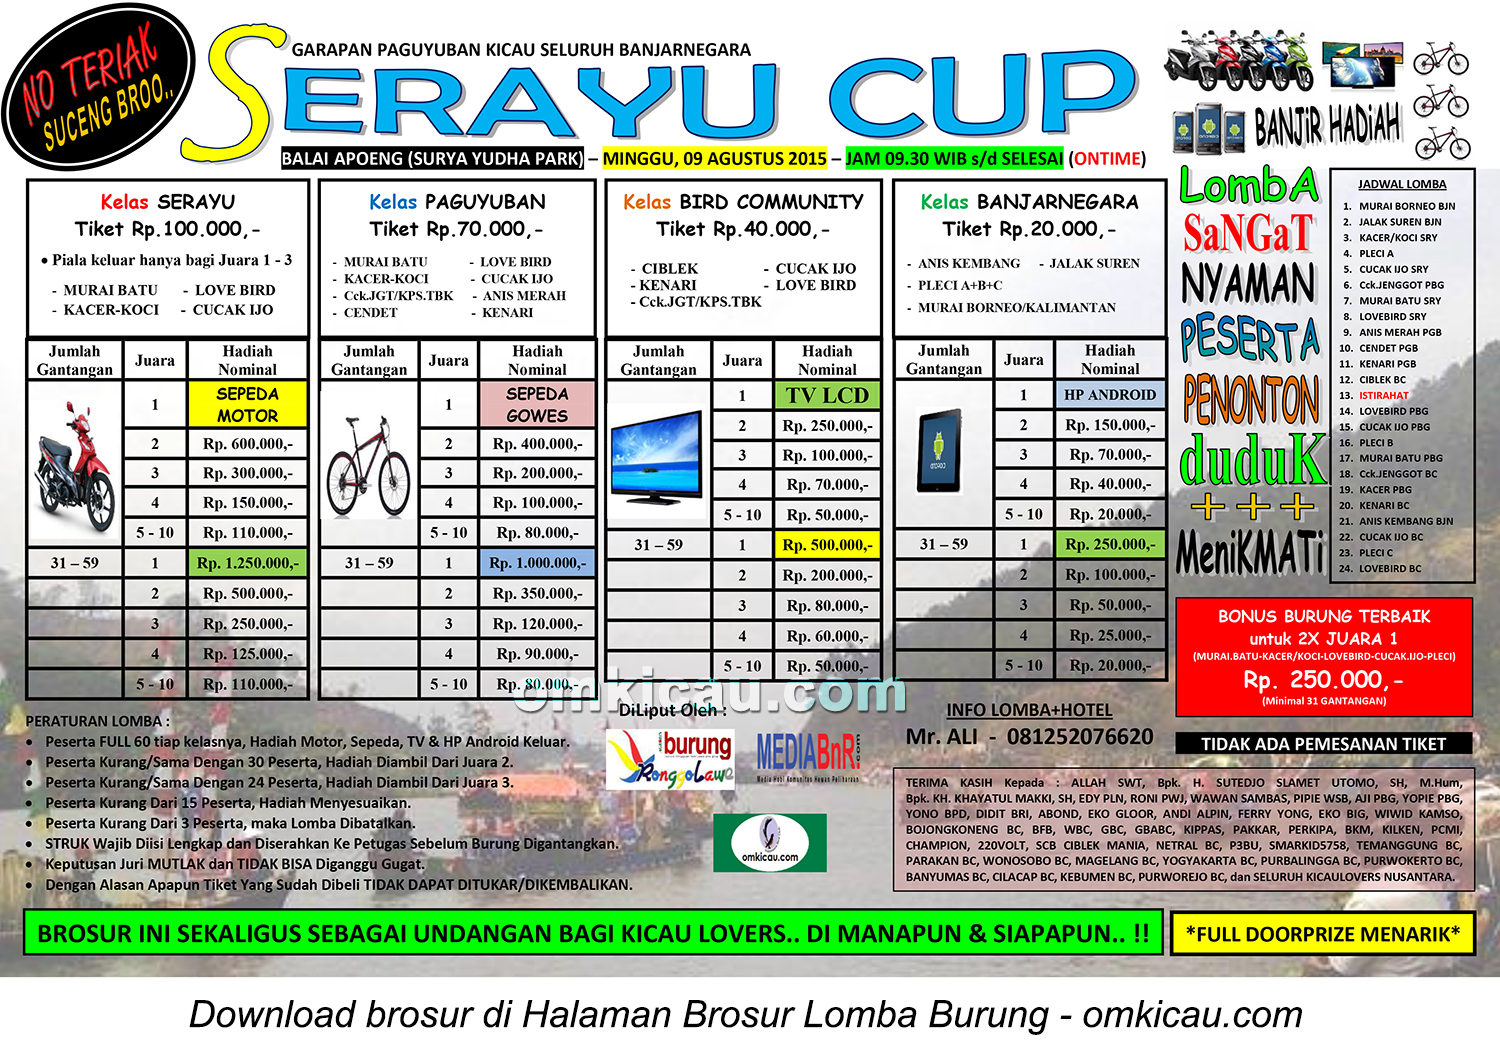 Brosur Lomba Burung Berkicau Serayu Cup, Banjarnegara, 9 Agustus 2015